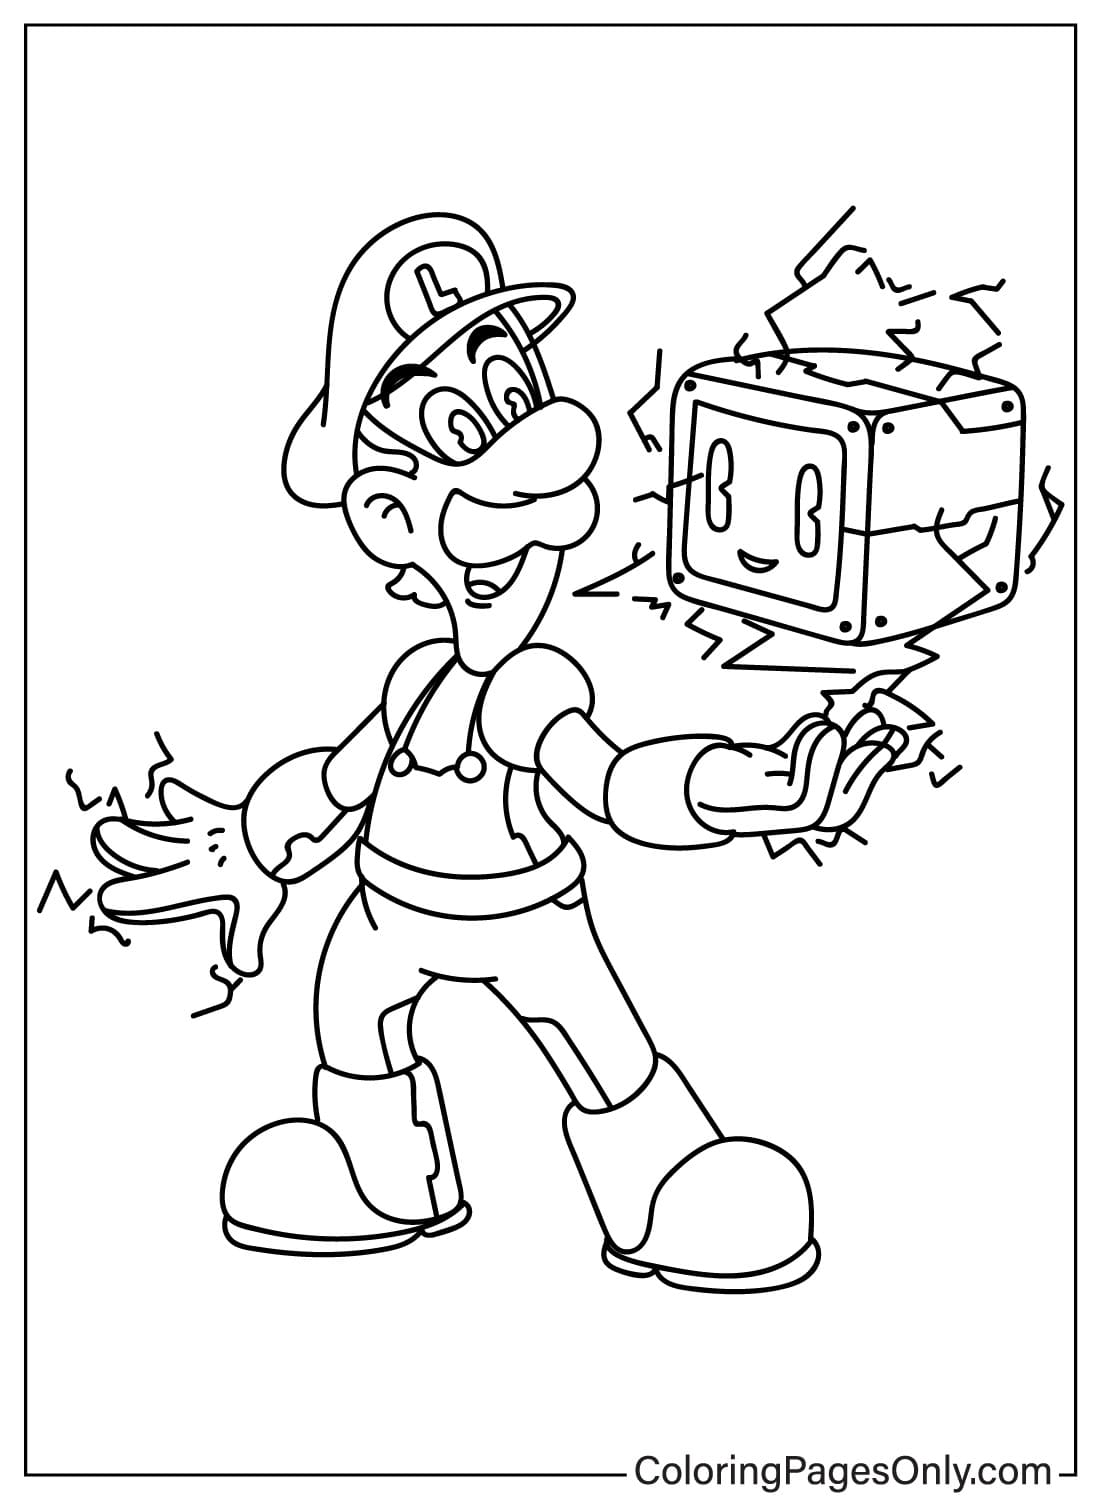 Luigi Coloring Page Free